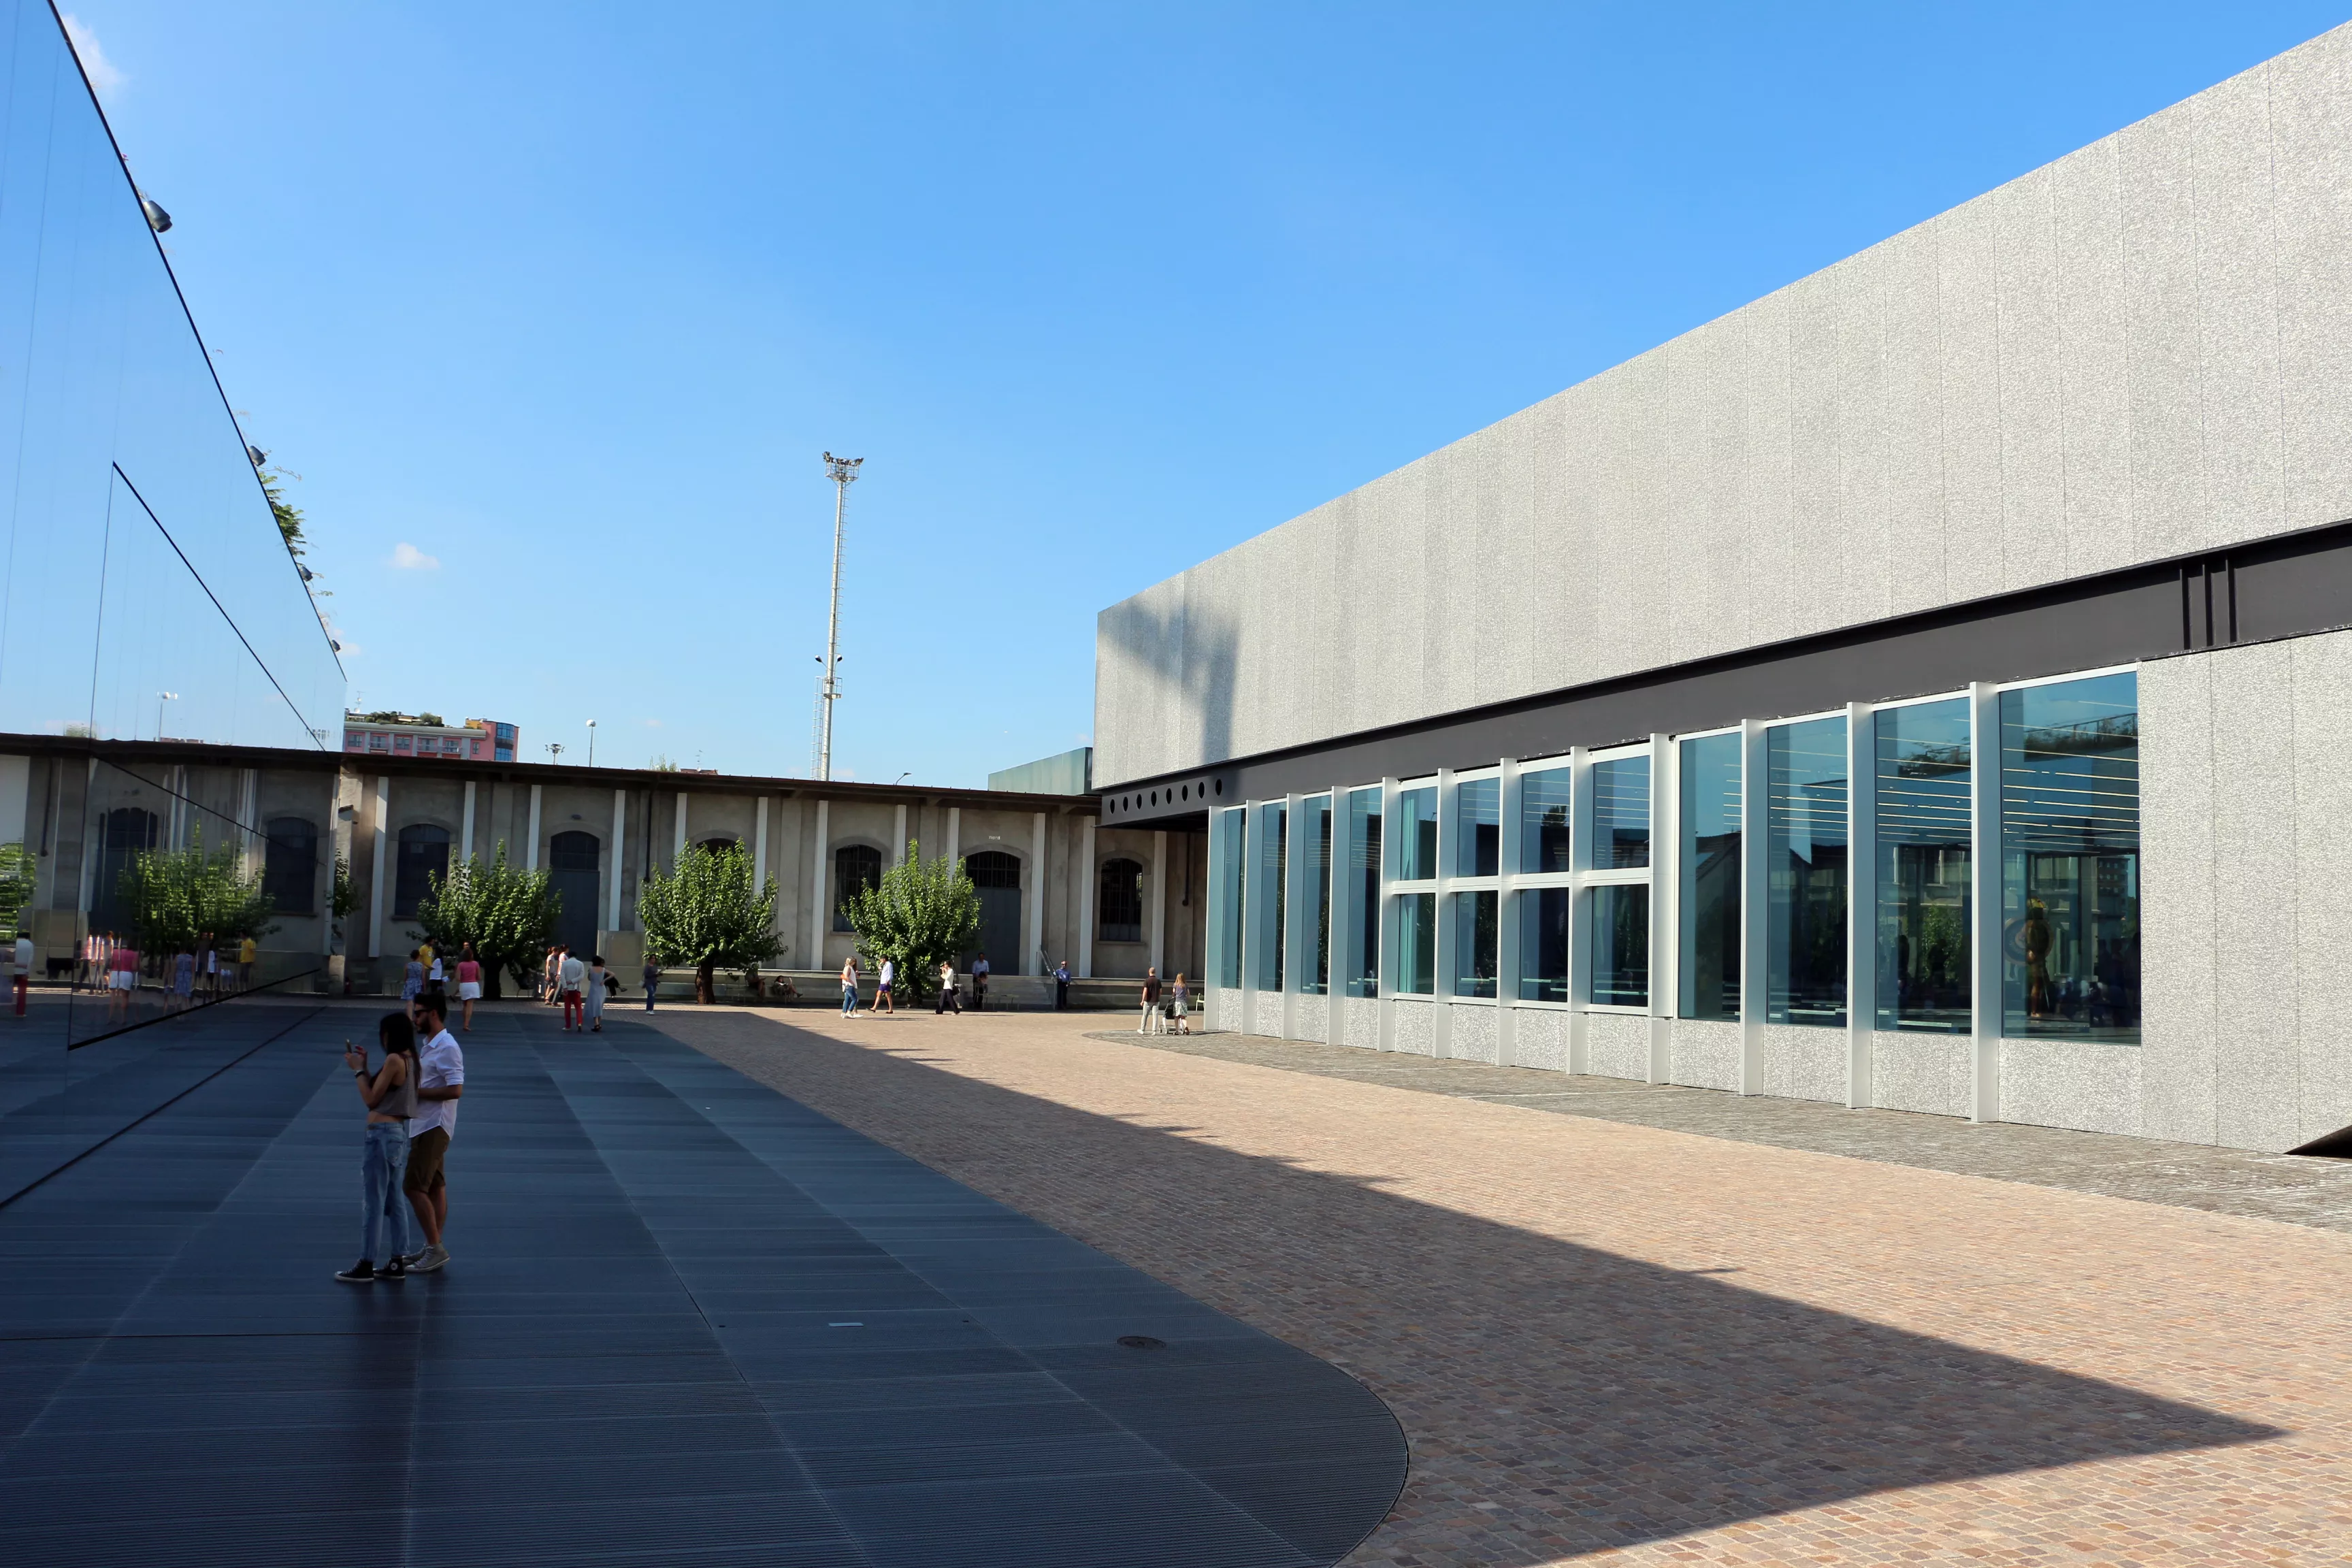 Fondazione Prada in Italy, Europe | Art Galleries - Rated 3.6